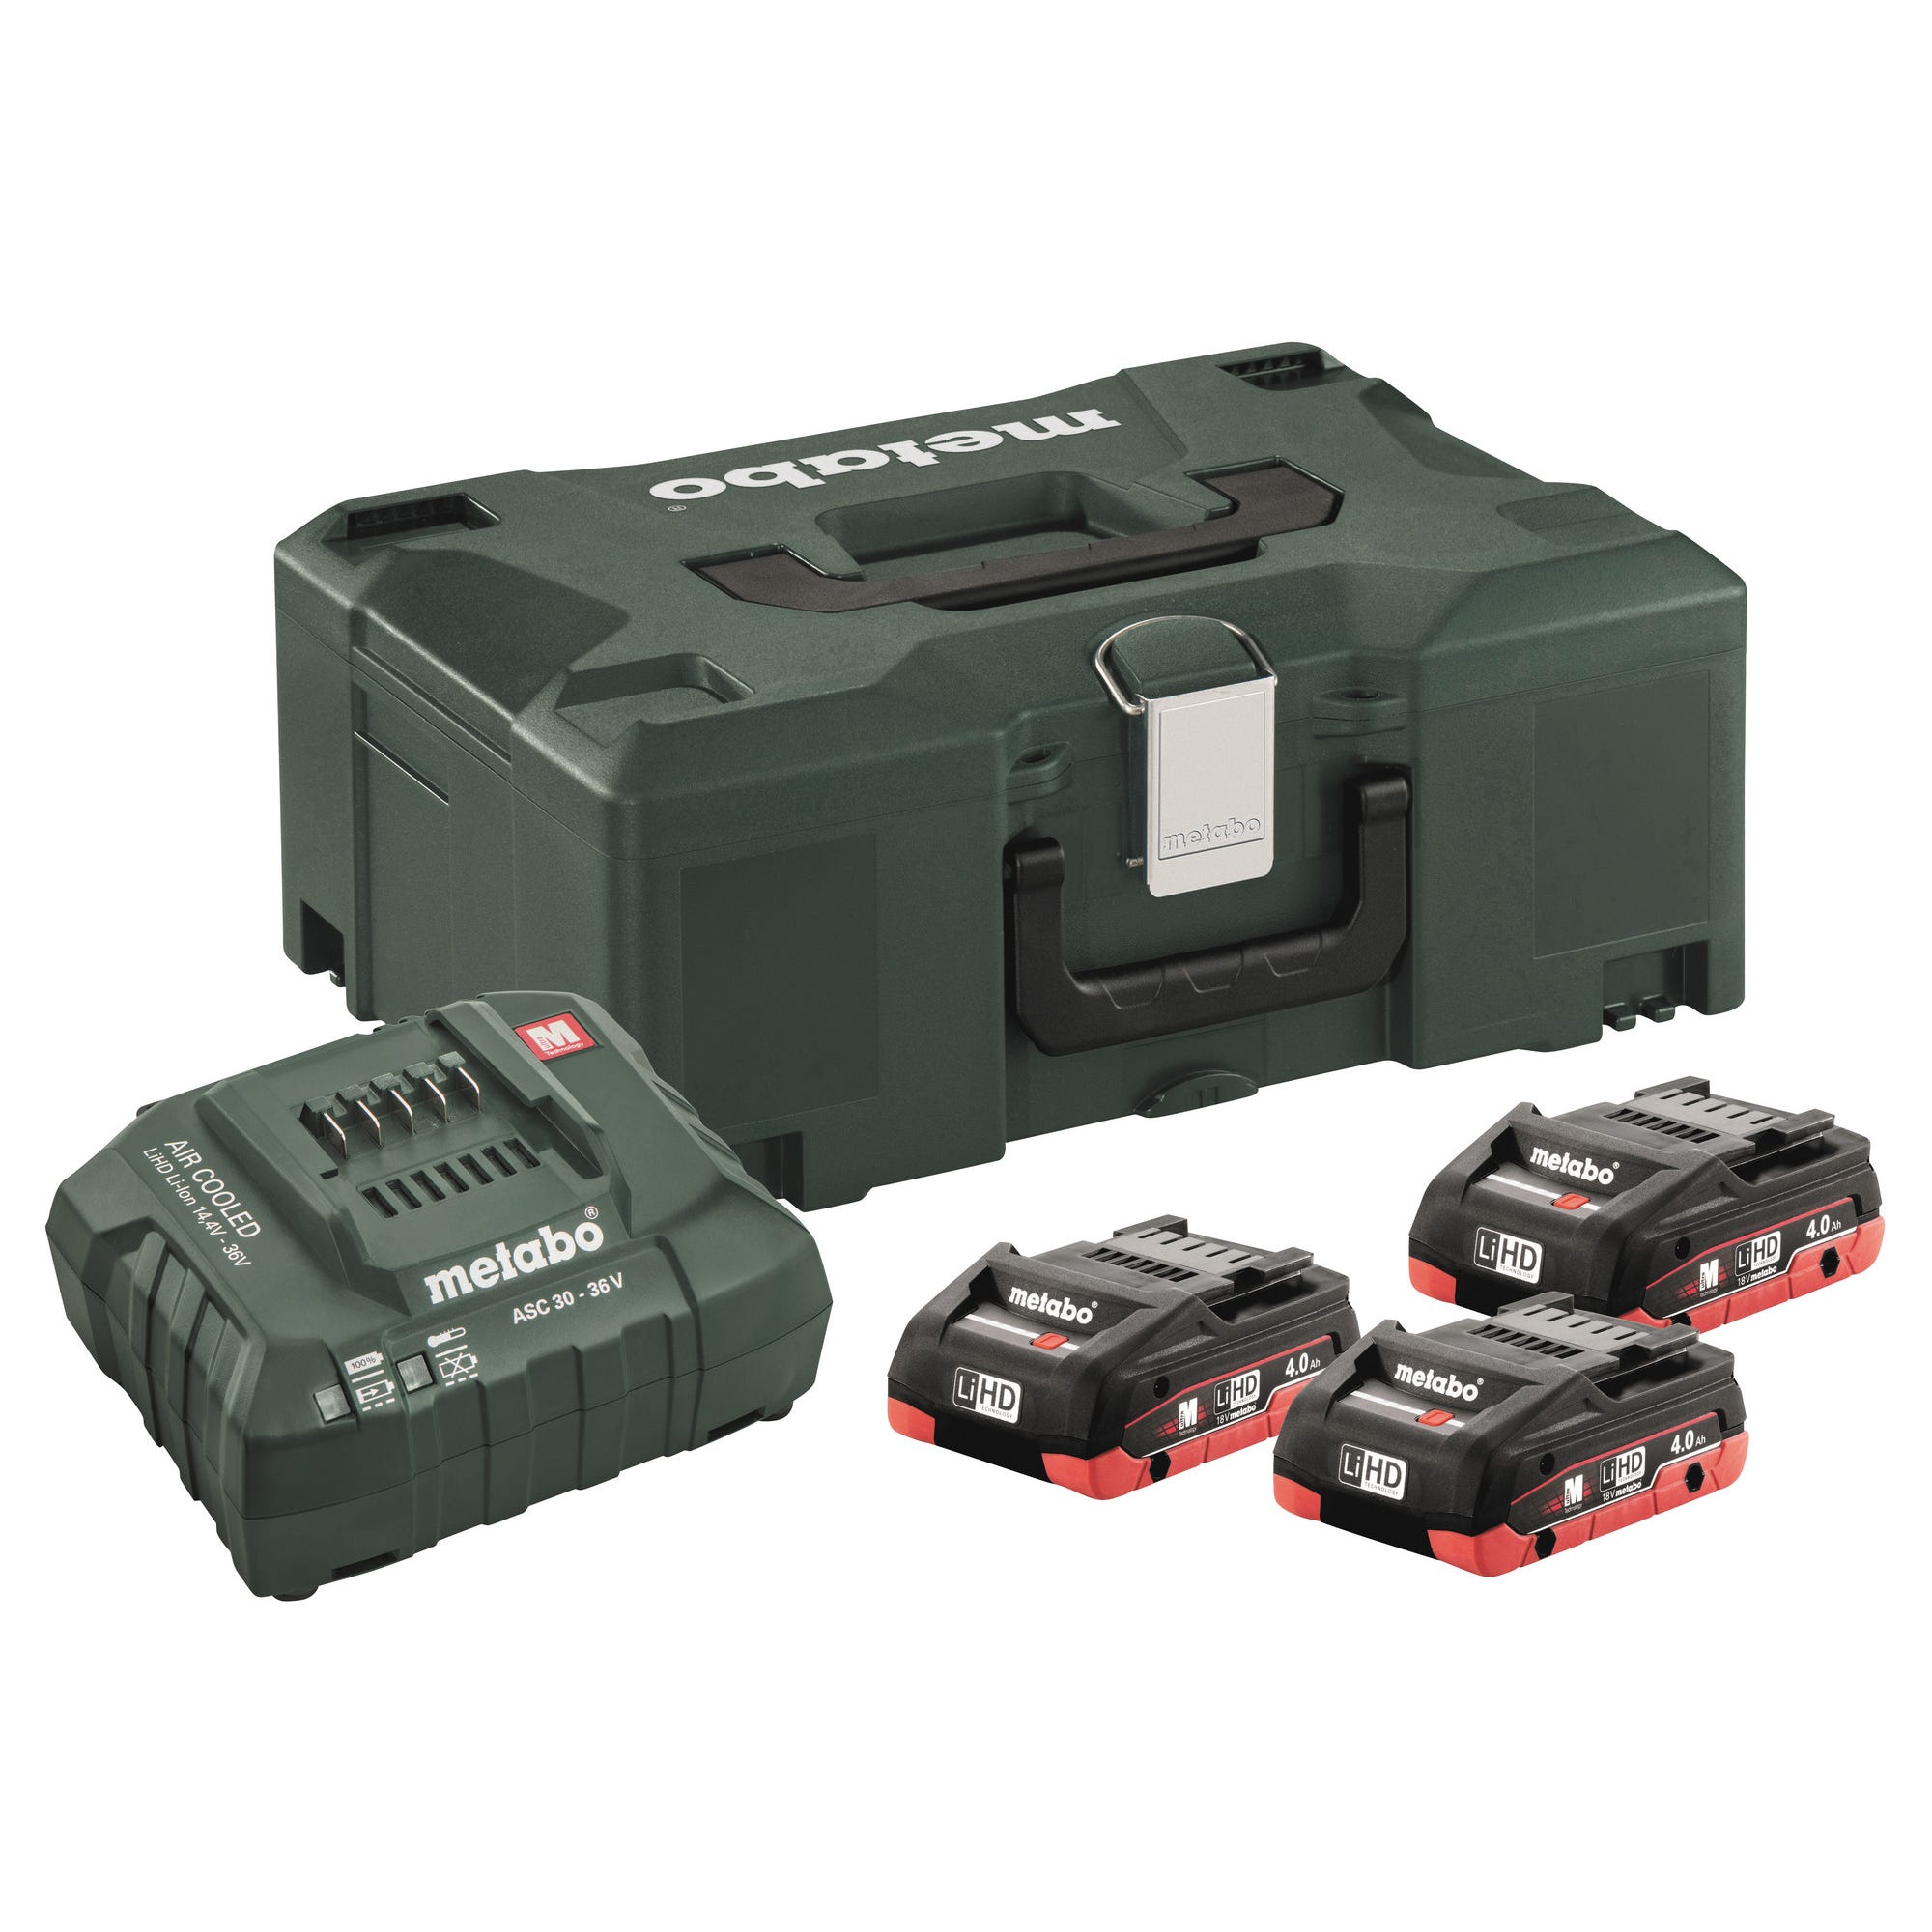 Pack 3 batteries 18V 4Ah LiHD + chargeur rapide ASC 55 en coffret Metaloc - 685133000 METABO 0